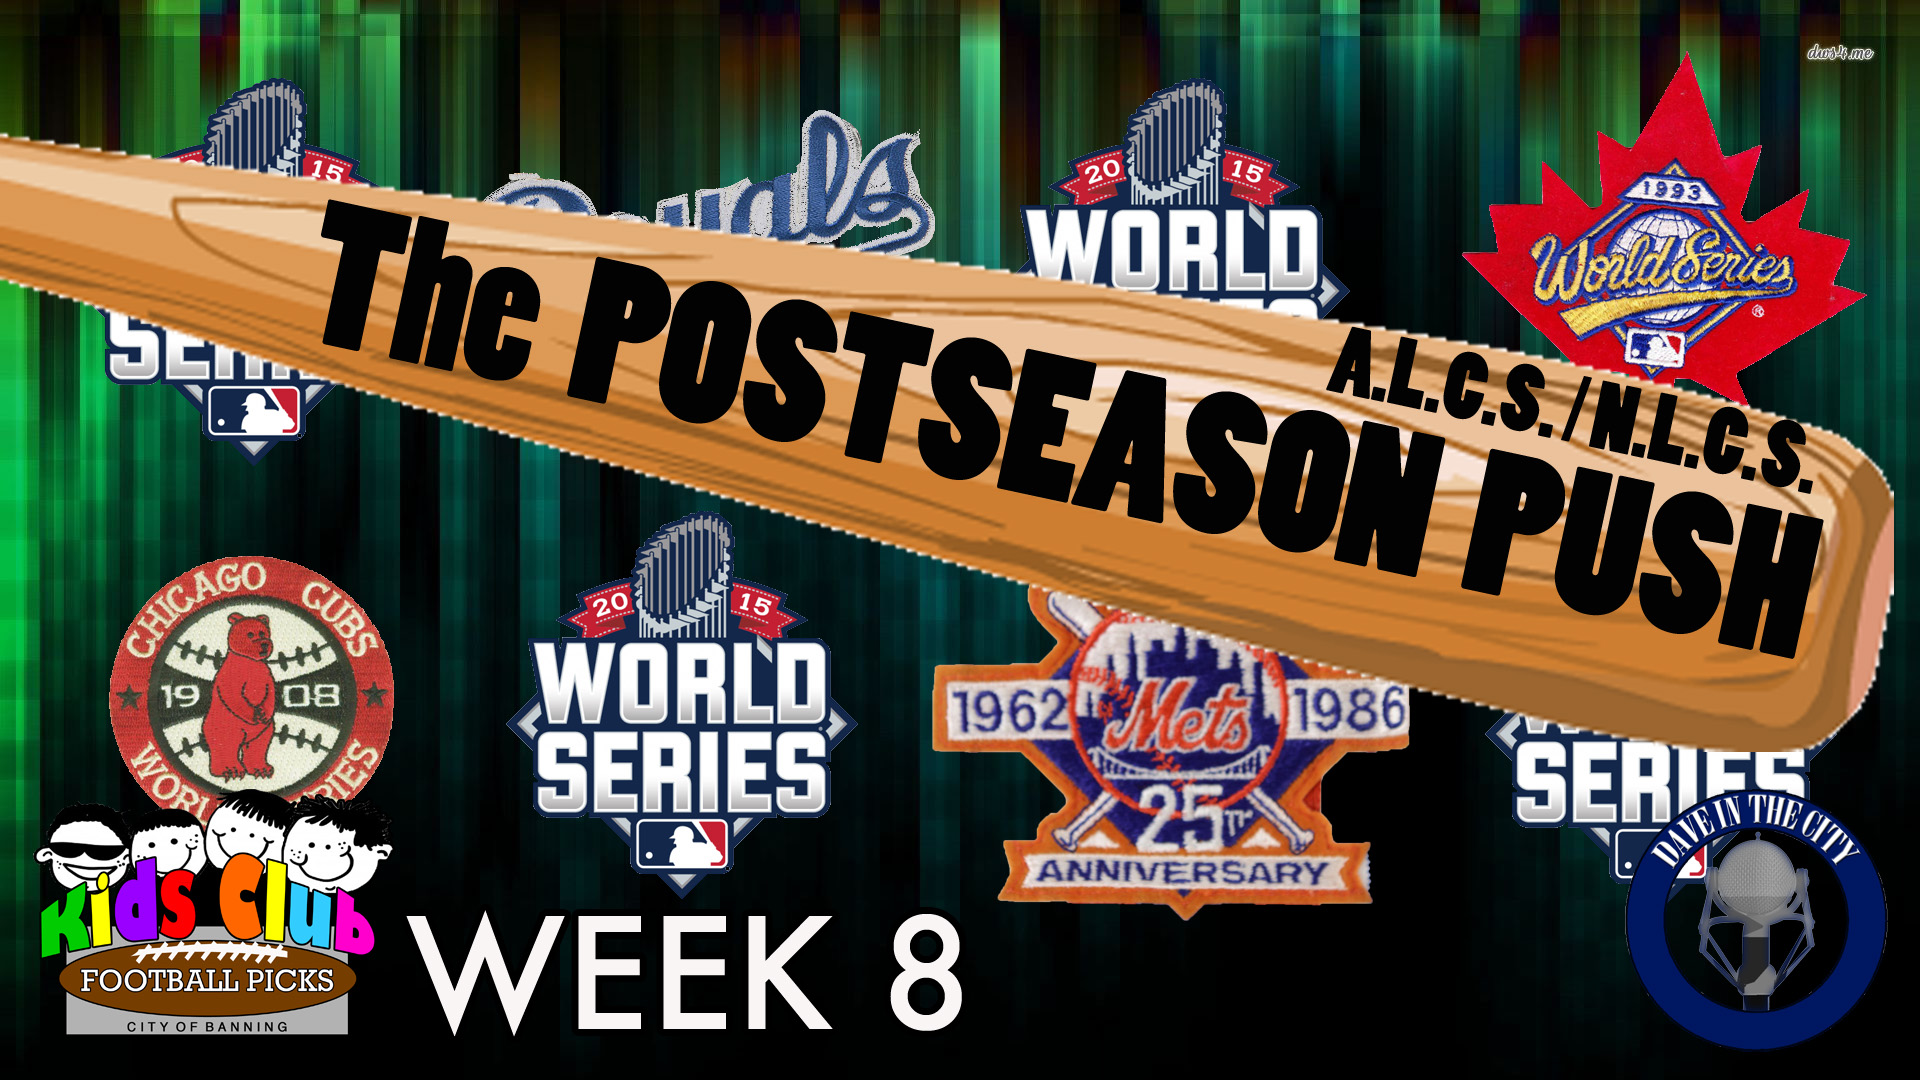 Podcast: MLB Postseason Push: NLCS, ALCS -- Mets, Royals, Kids Club Wk 8, NFL (10-21-15)